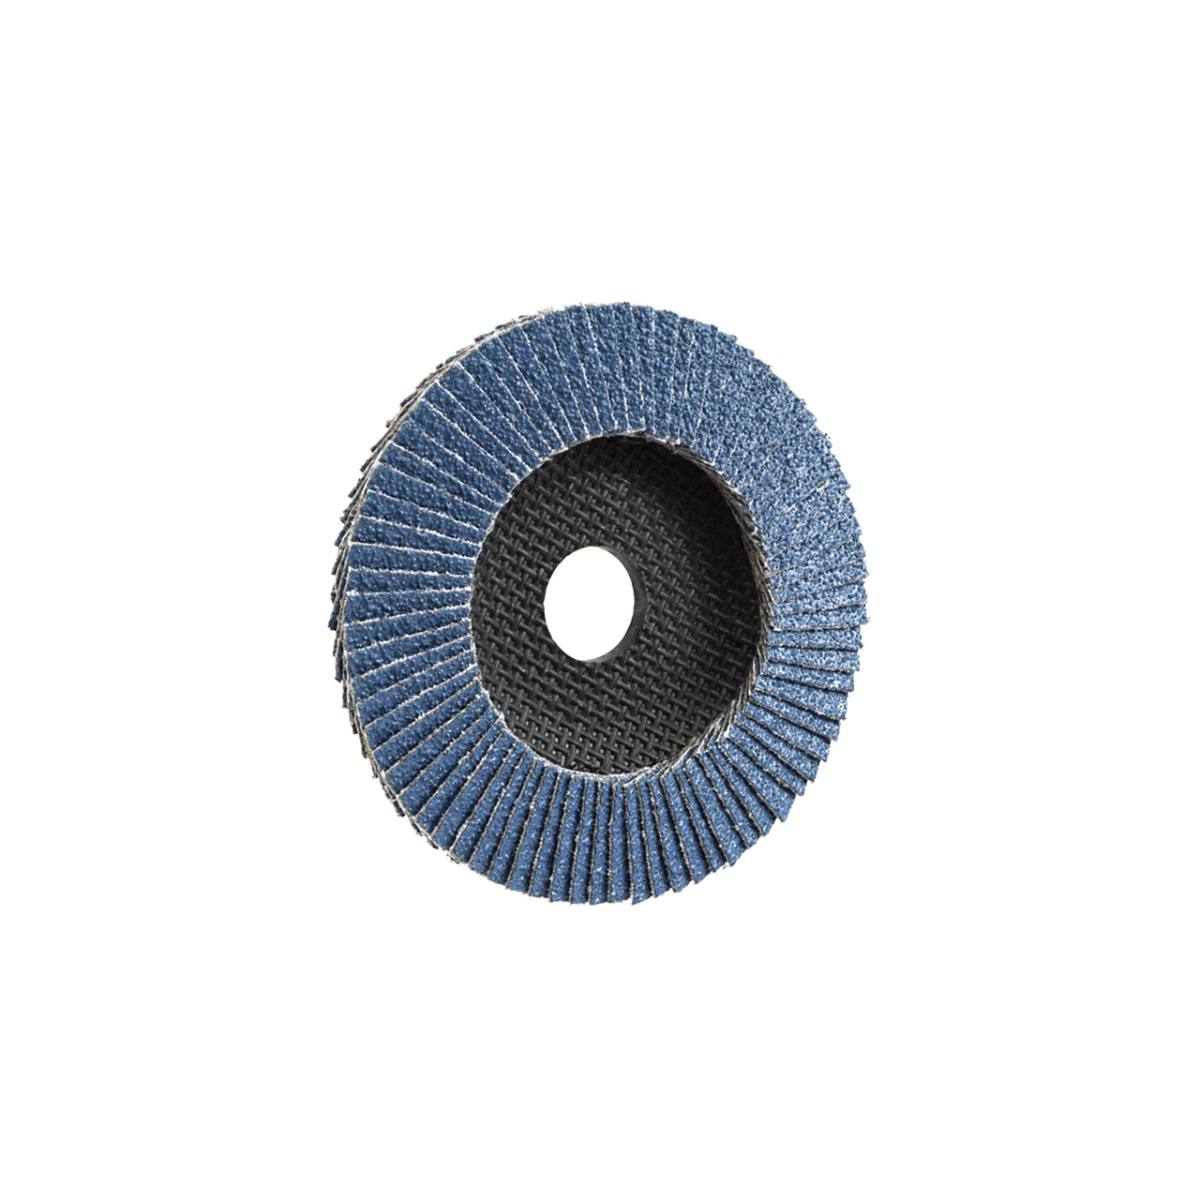 TRIMFIX ZIRCOPUR, 115 mm x 22,2 mm, grano 60, disco de láminas